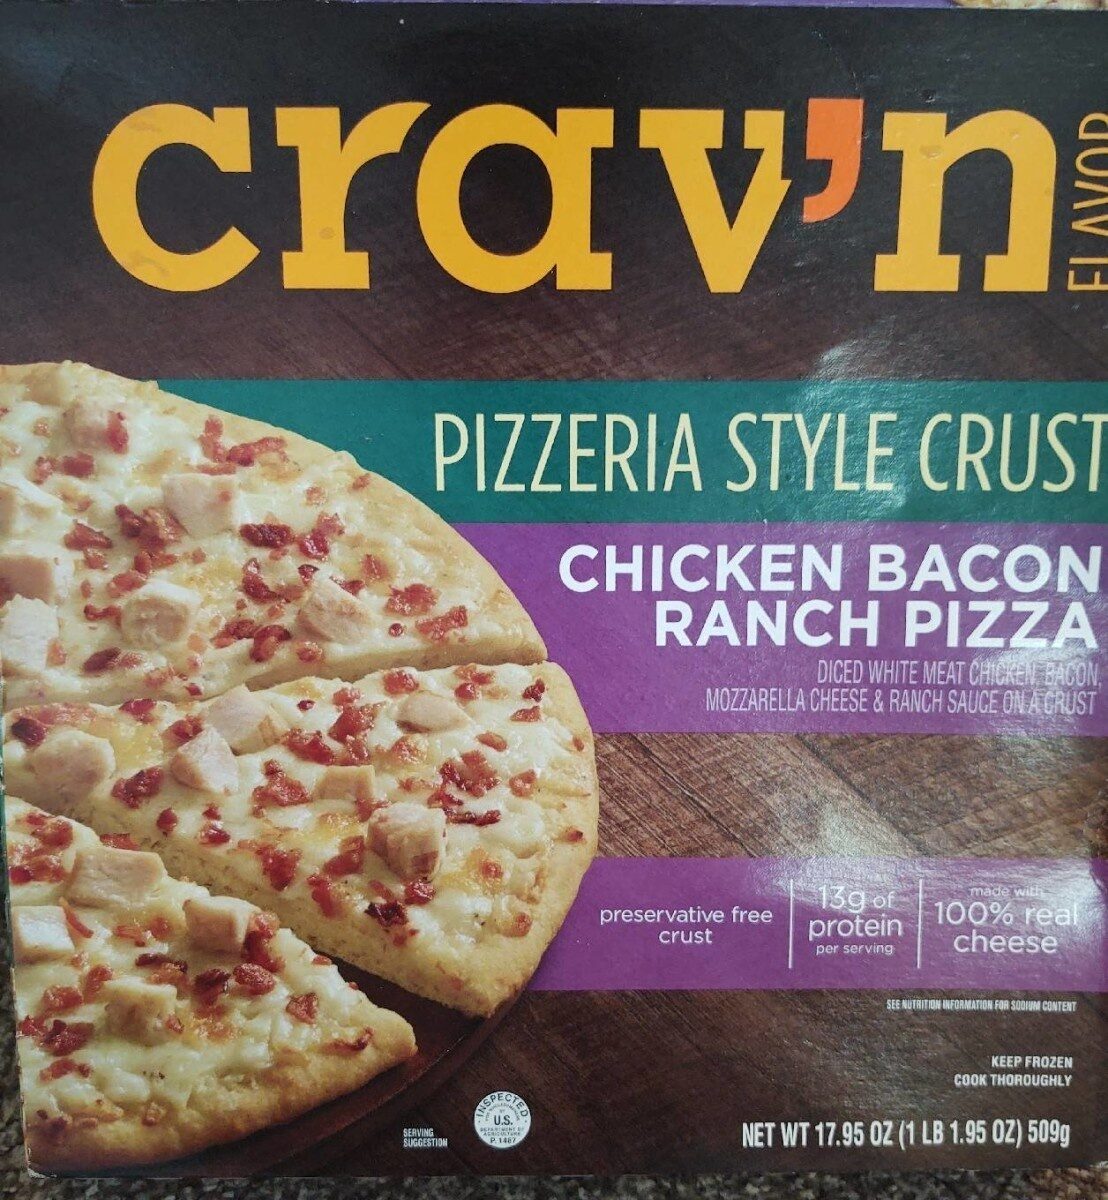 Crav'n flavor pizzeria style crust chicken bacon ranch pizza - Produkt - en